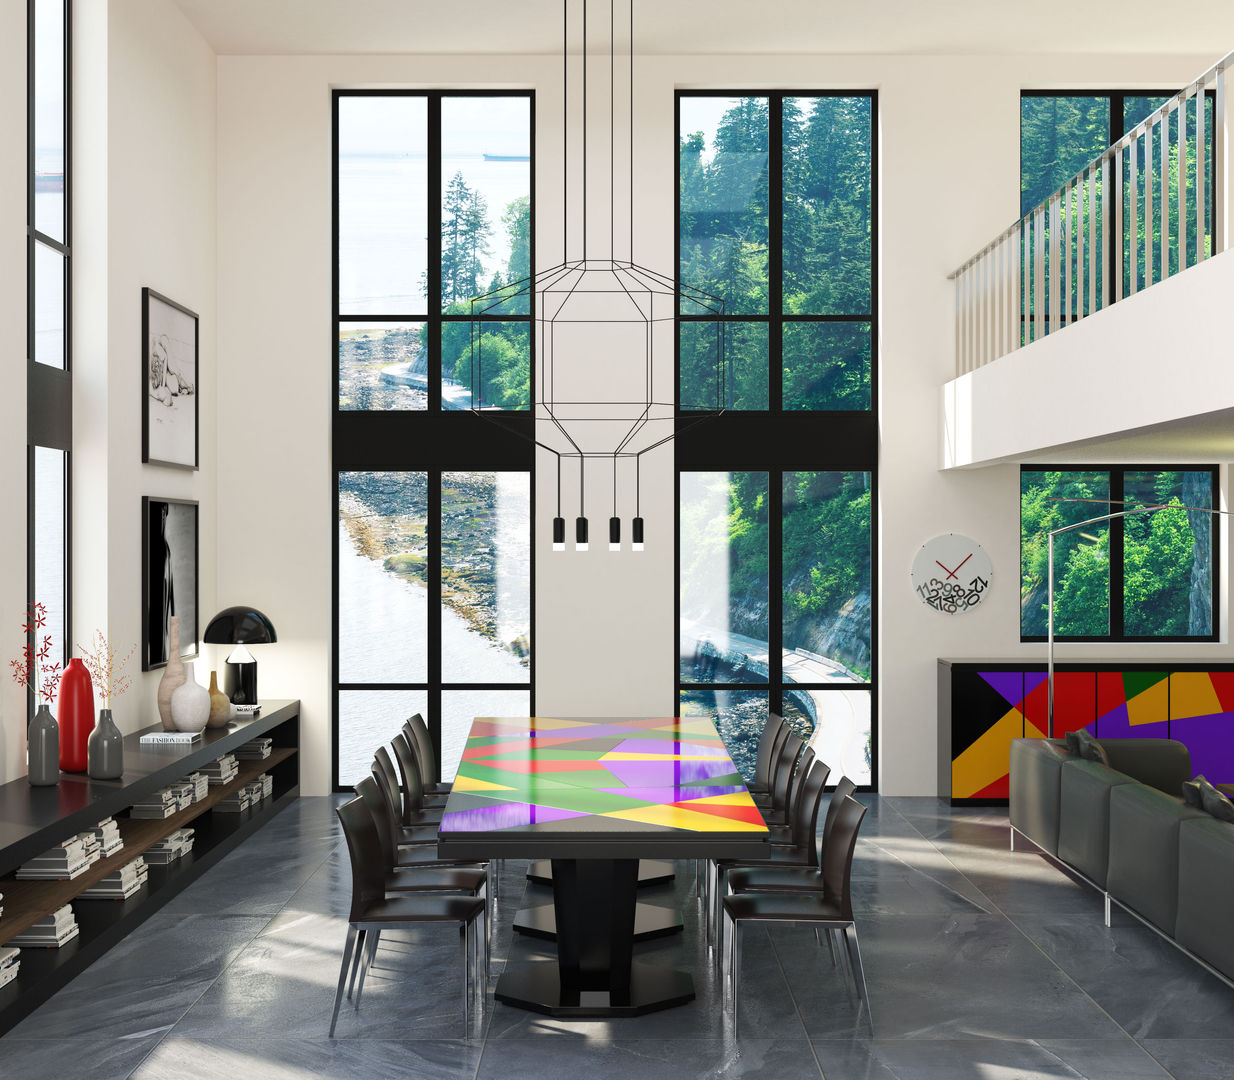 VILLA MODERNA a 2 passi dal Lago di Garda, BALDO TAVOLI BALDO TAVOLI Modern living room Wood Wood effect